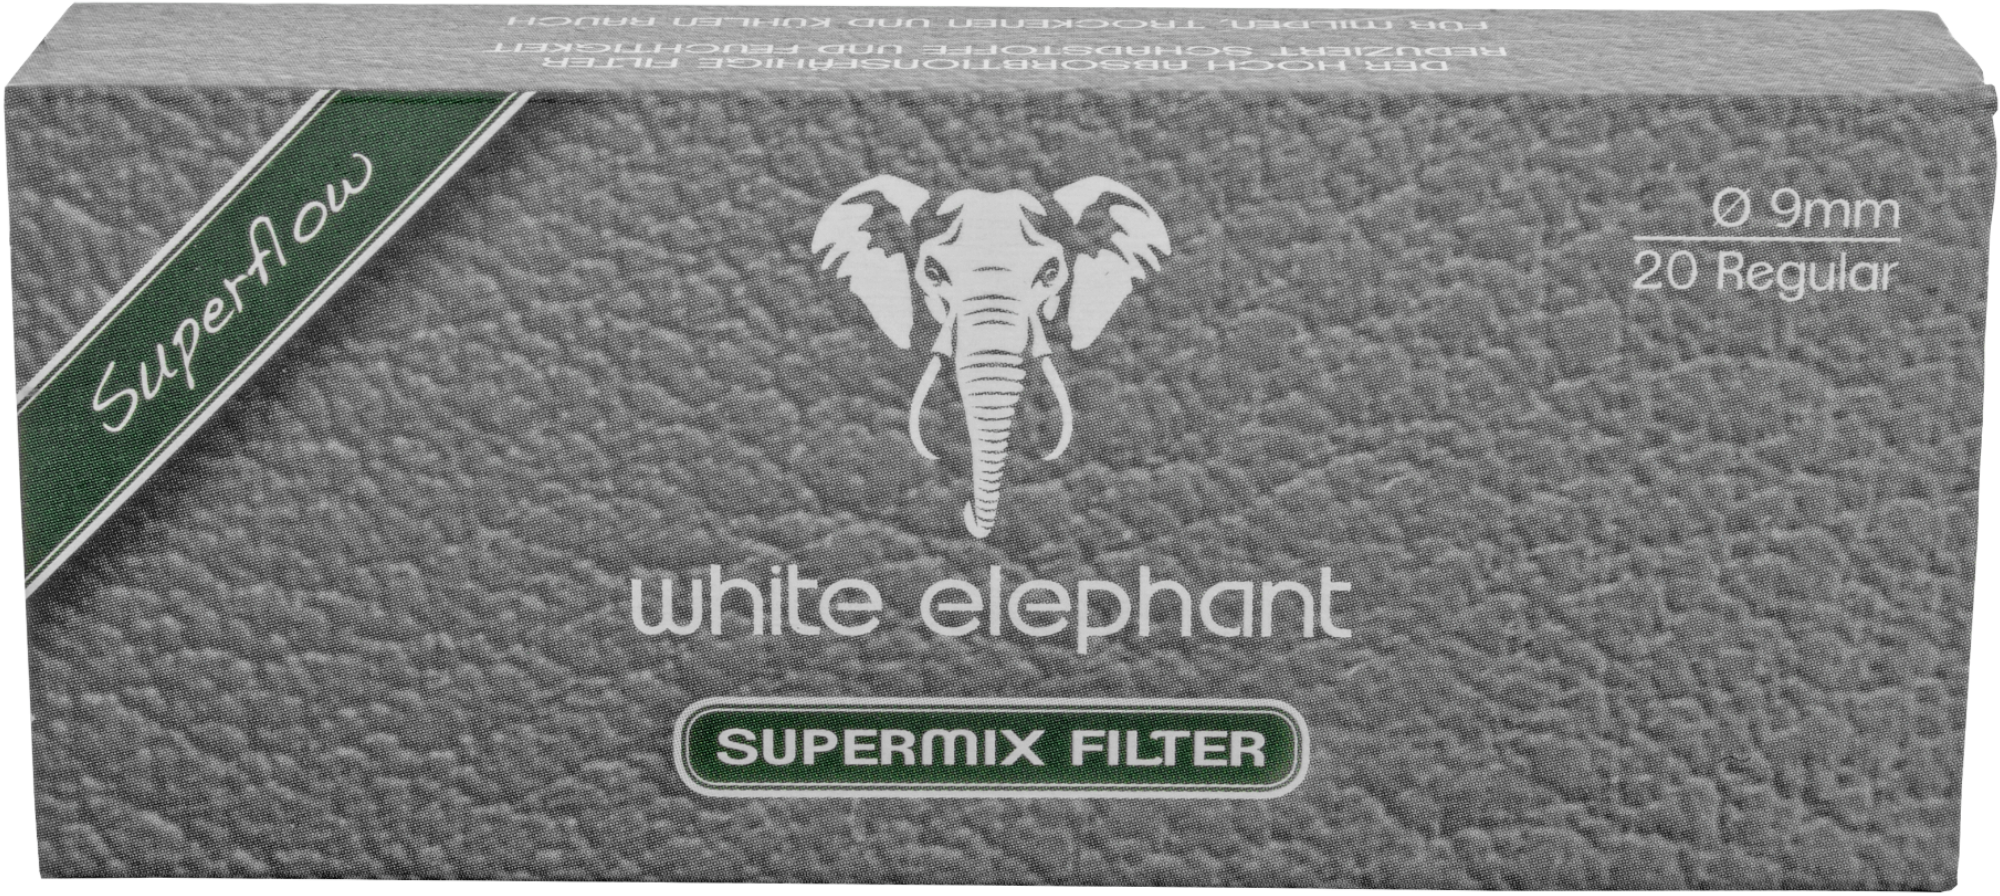 White Elephant 20 Super Mix Filter 9mm (15x)